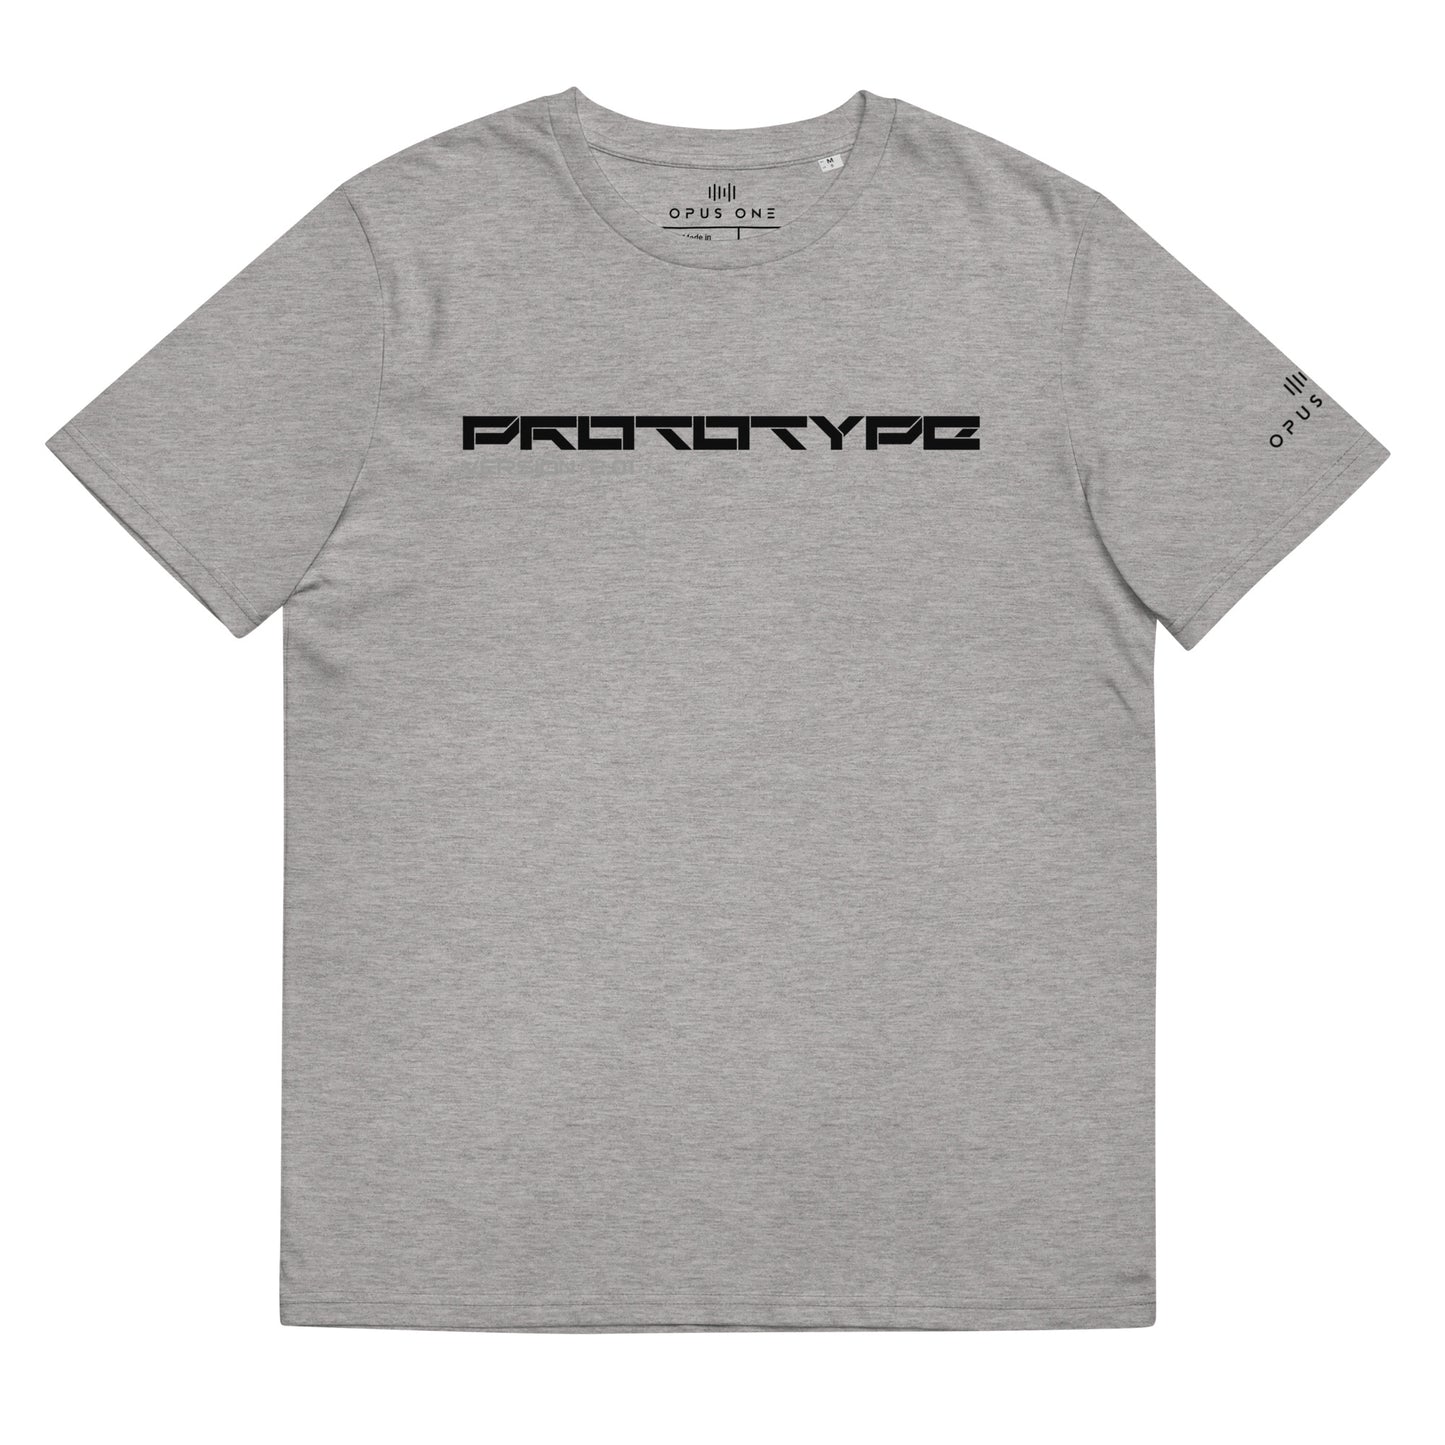 Prototype (v3) Unisex organic cotton t-shirt (Black Text)